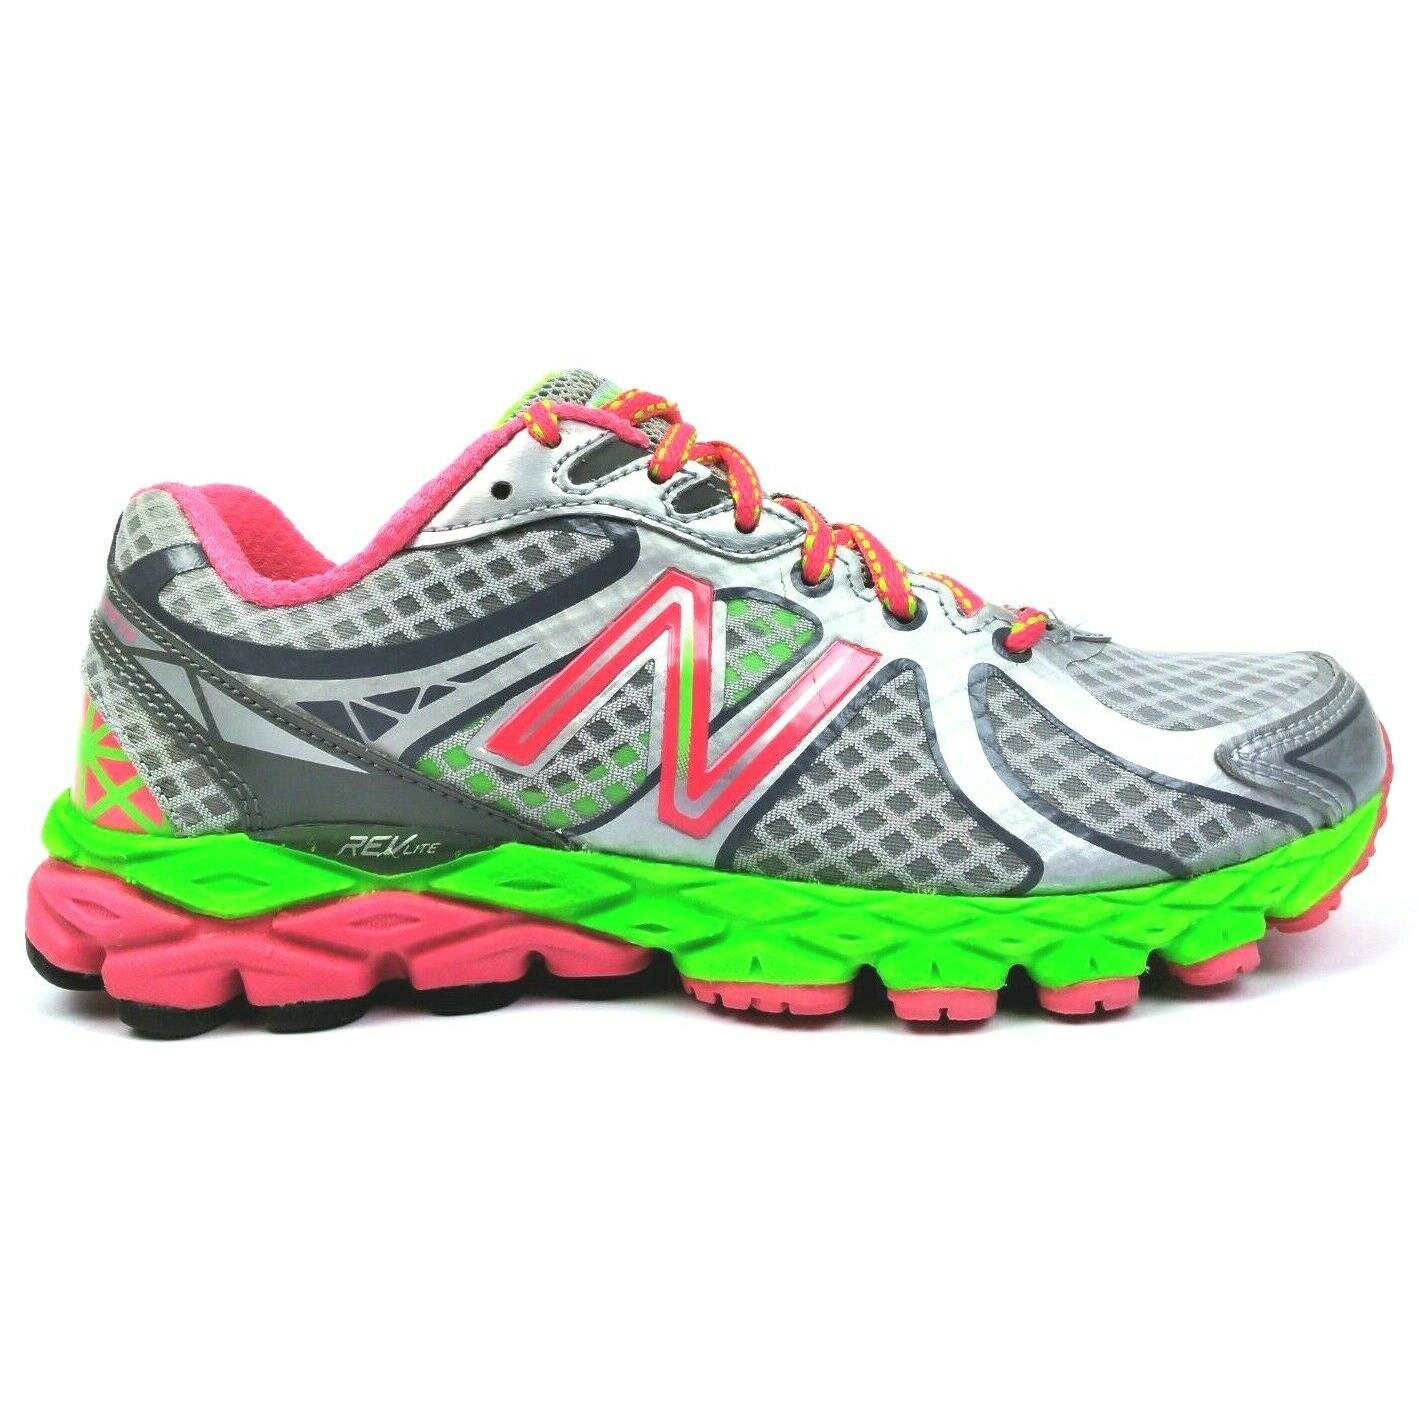 Balance Women`s 870v3 Lace Up Running Shoes Grey Pink Green Size 6 B Medium